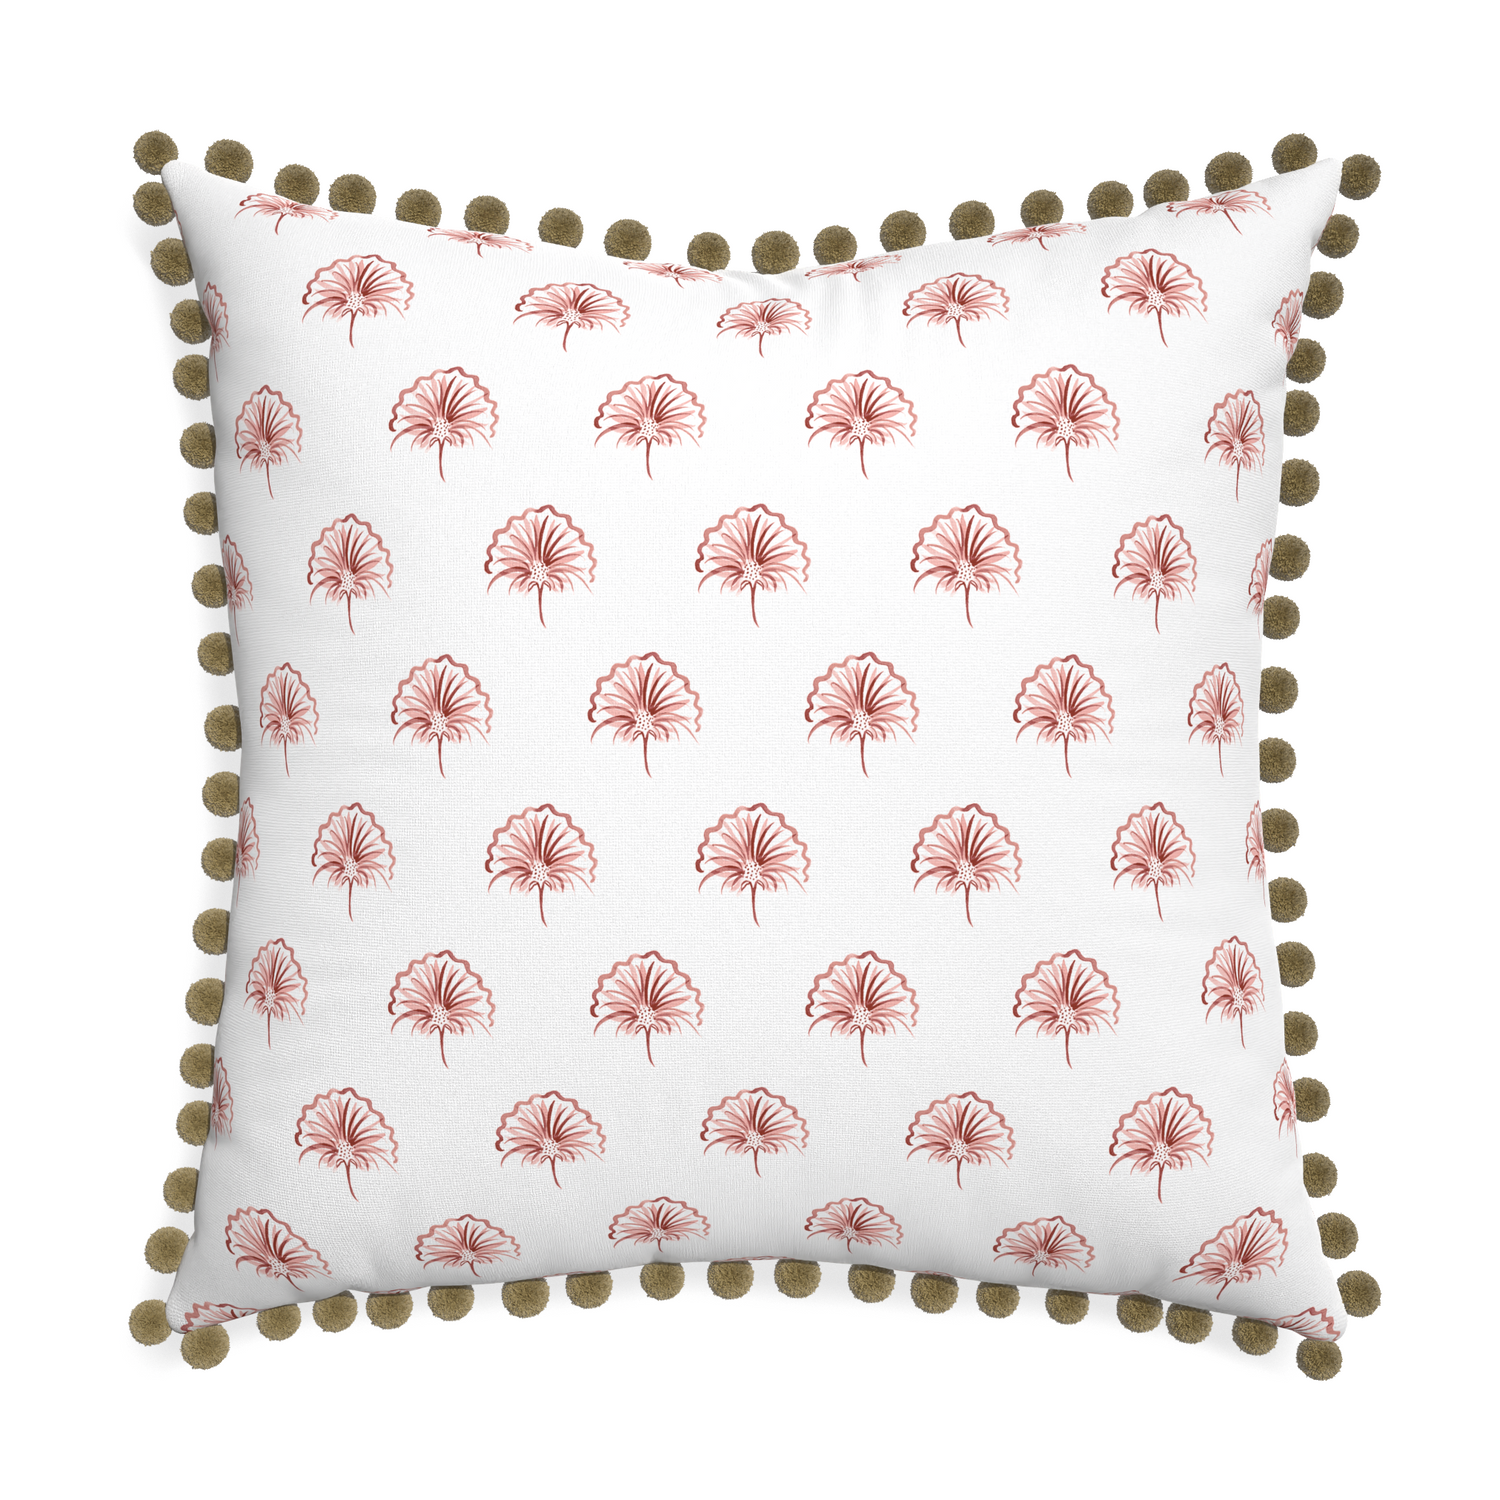 Euro-sham penelope rose custom pillow with olive pom pom on white background